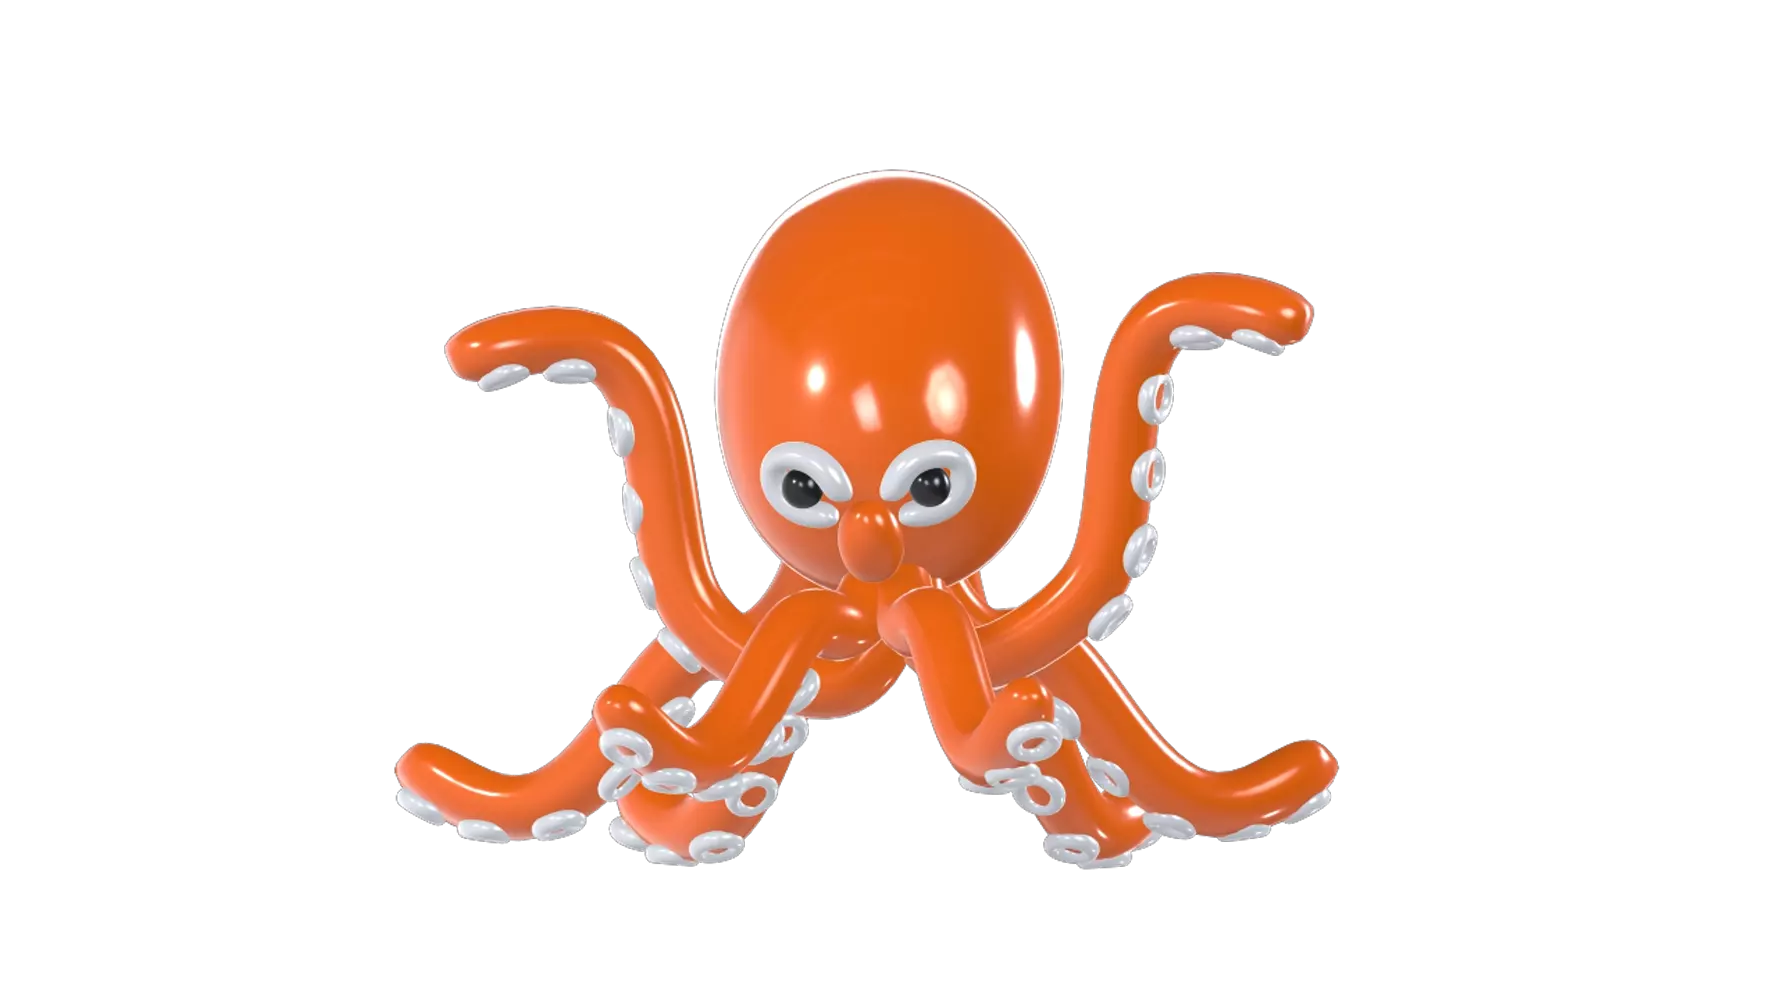 Octopus Balloon 3D Graphic